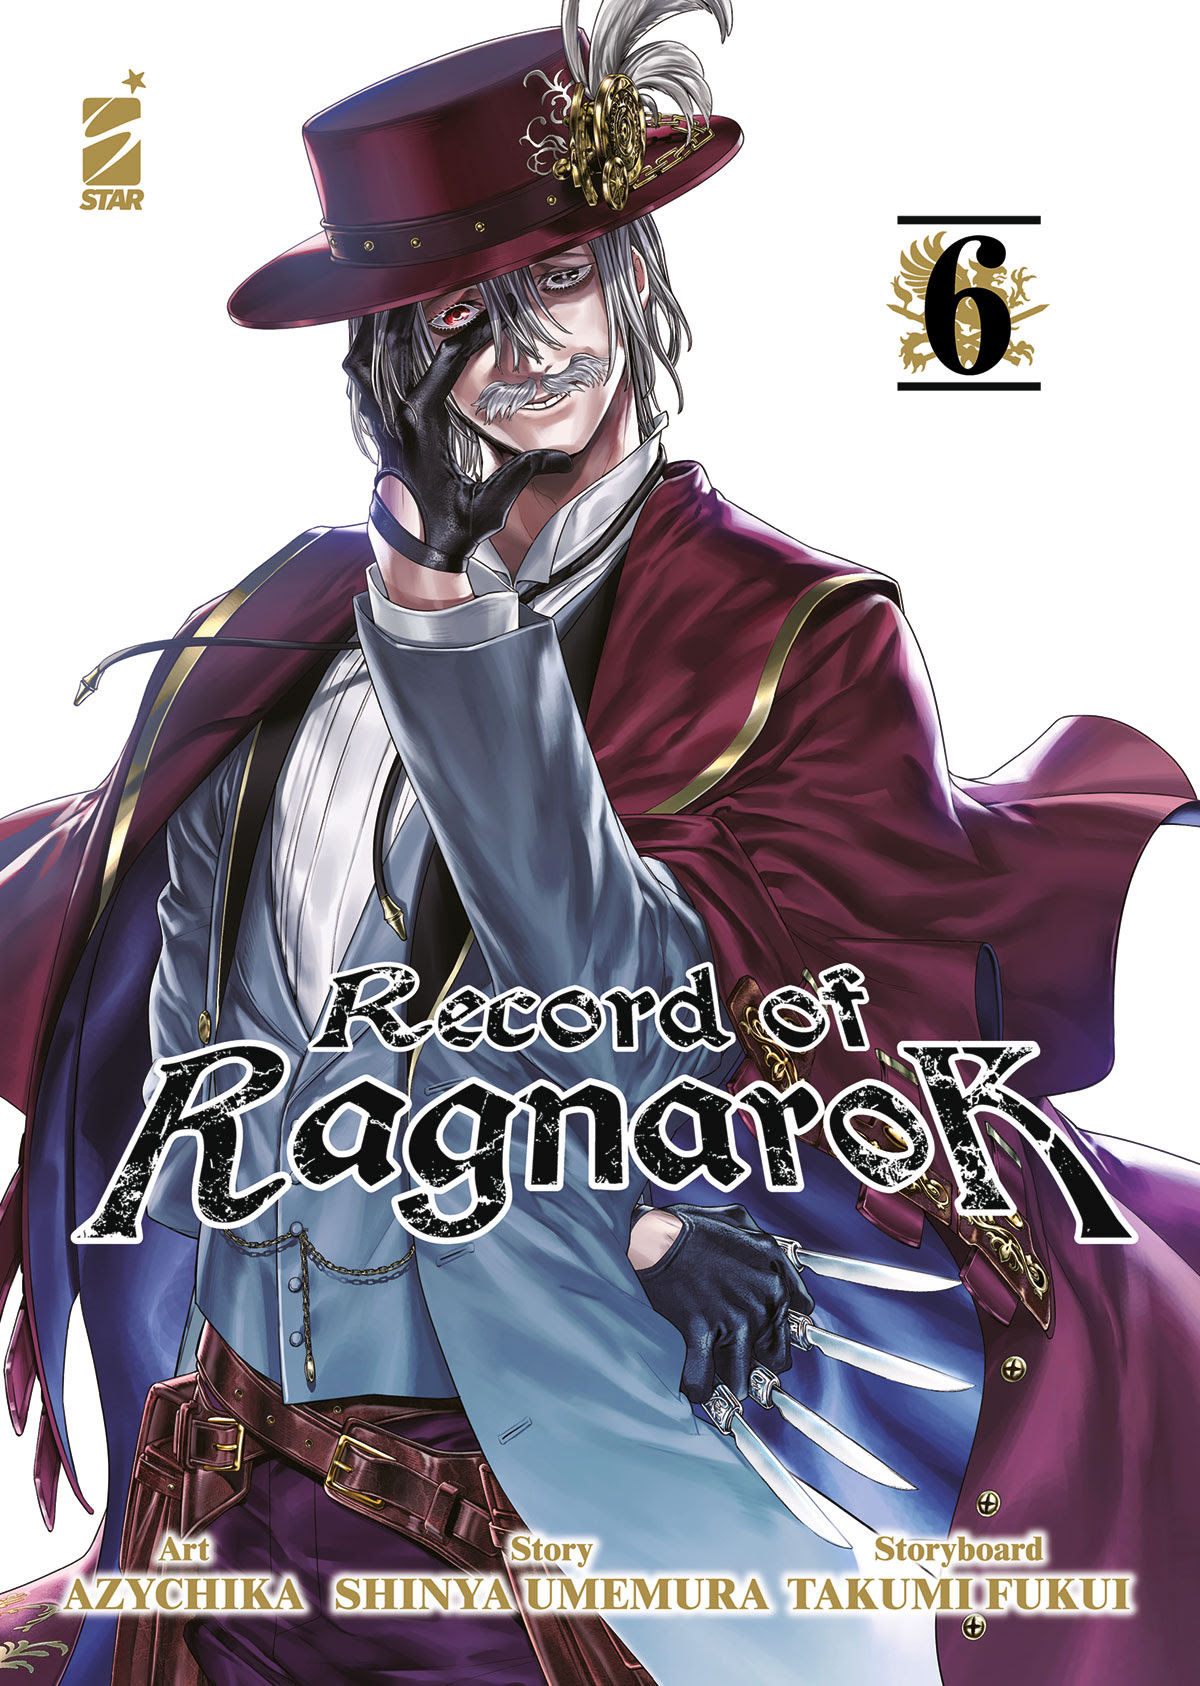 Record of Ragnarok Vol. 6 (Record of Ragnarok, #6) in Kindle/PDF/EPUB